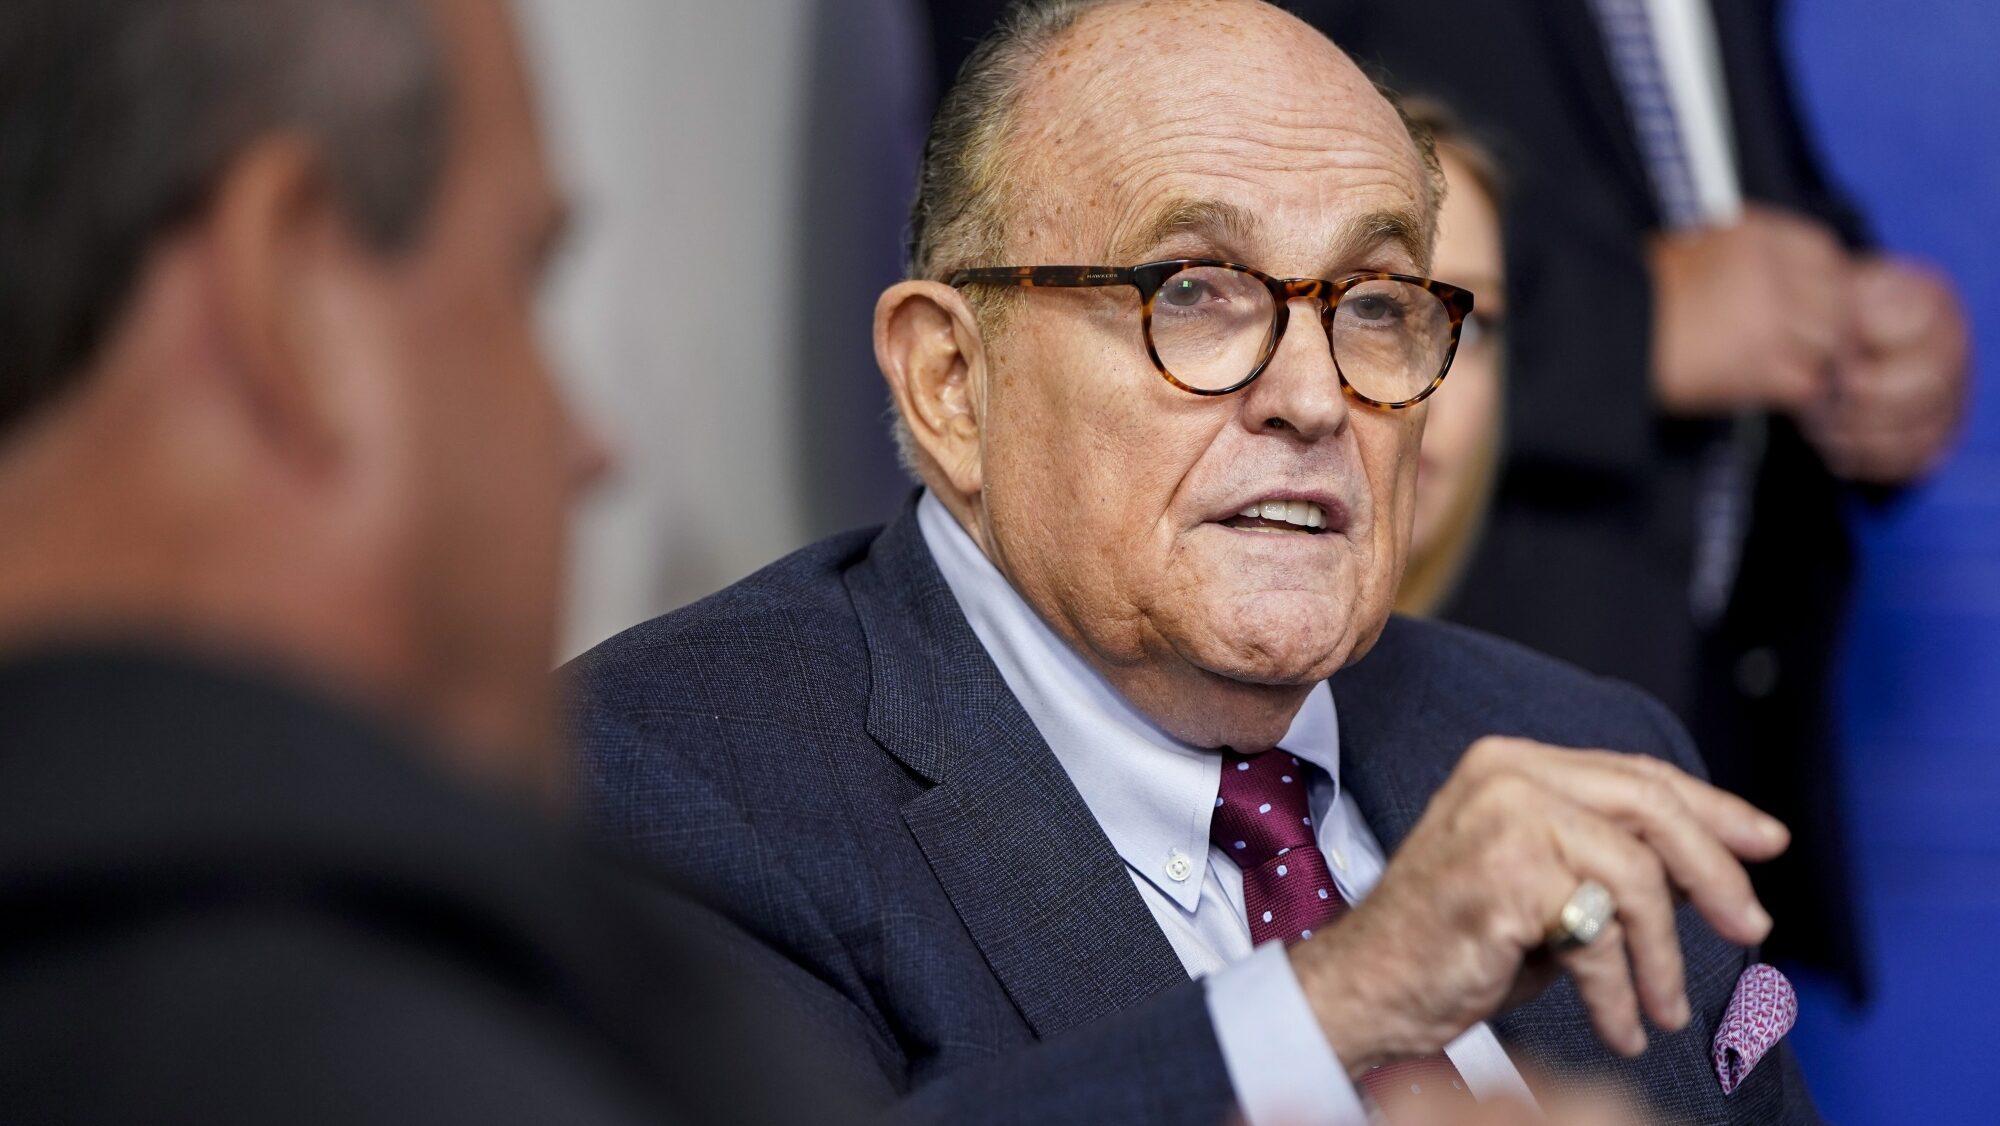 Rudy Giuliani's net worth